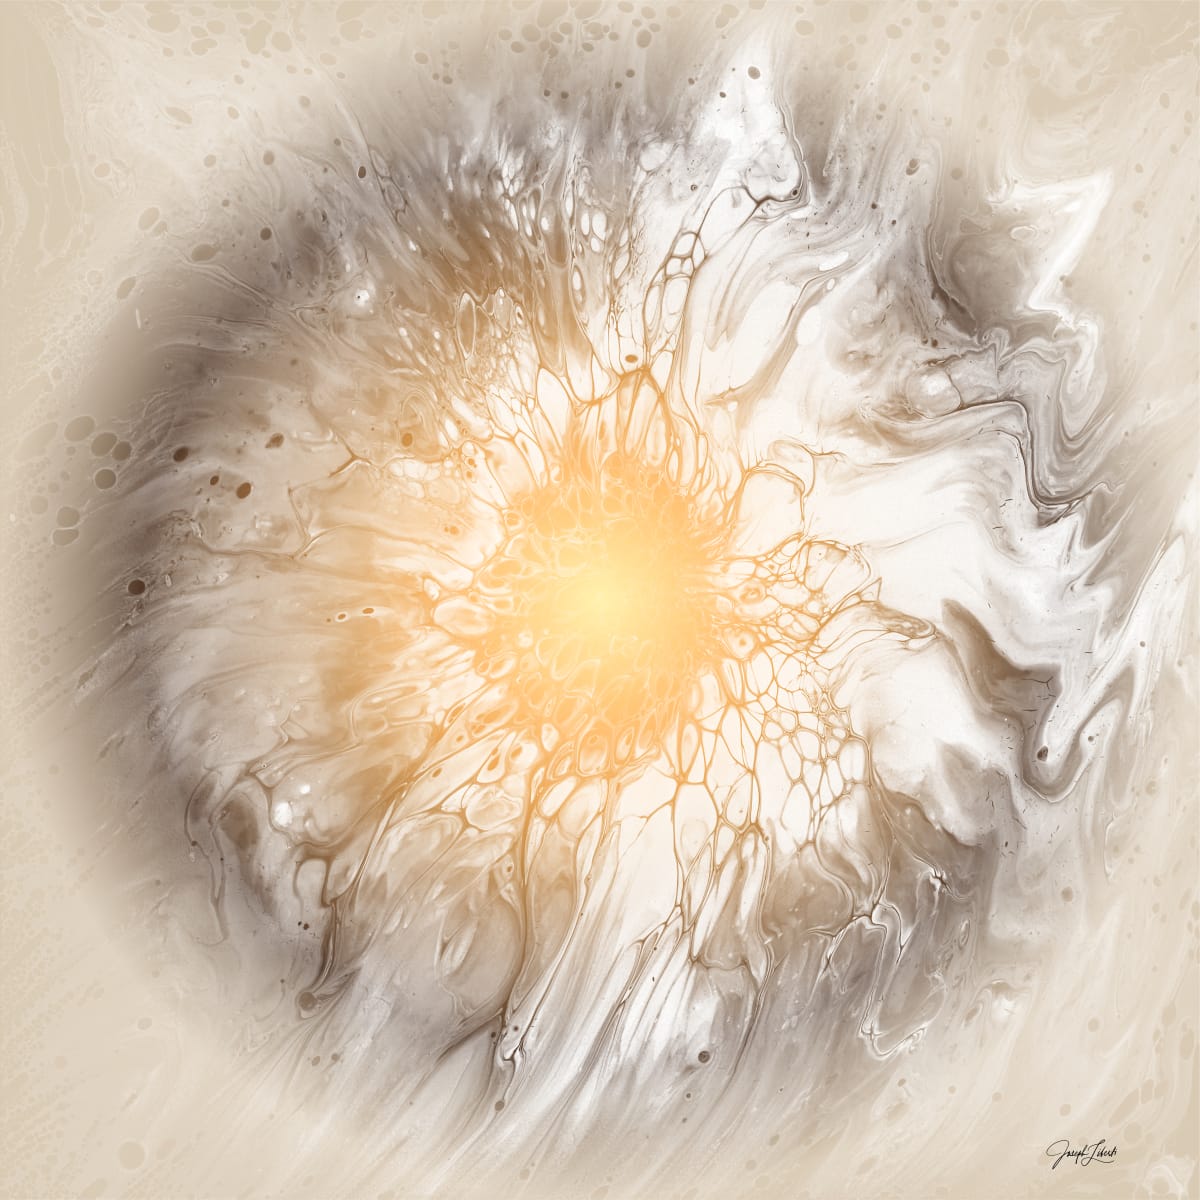 Glorious Sun II by Joseph Liberti  Image: A golden orb os sun draped with a celestial lace.